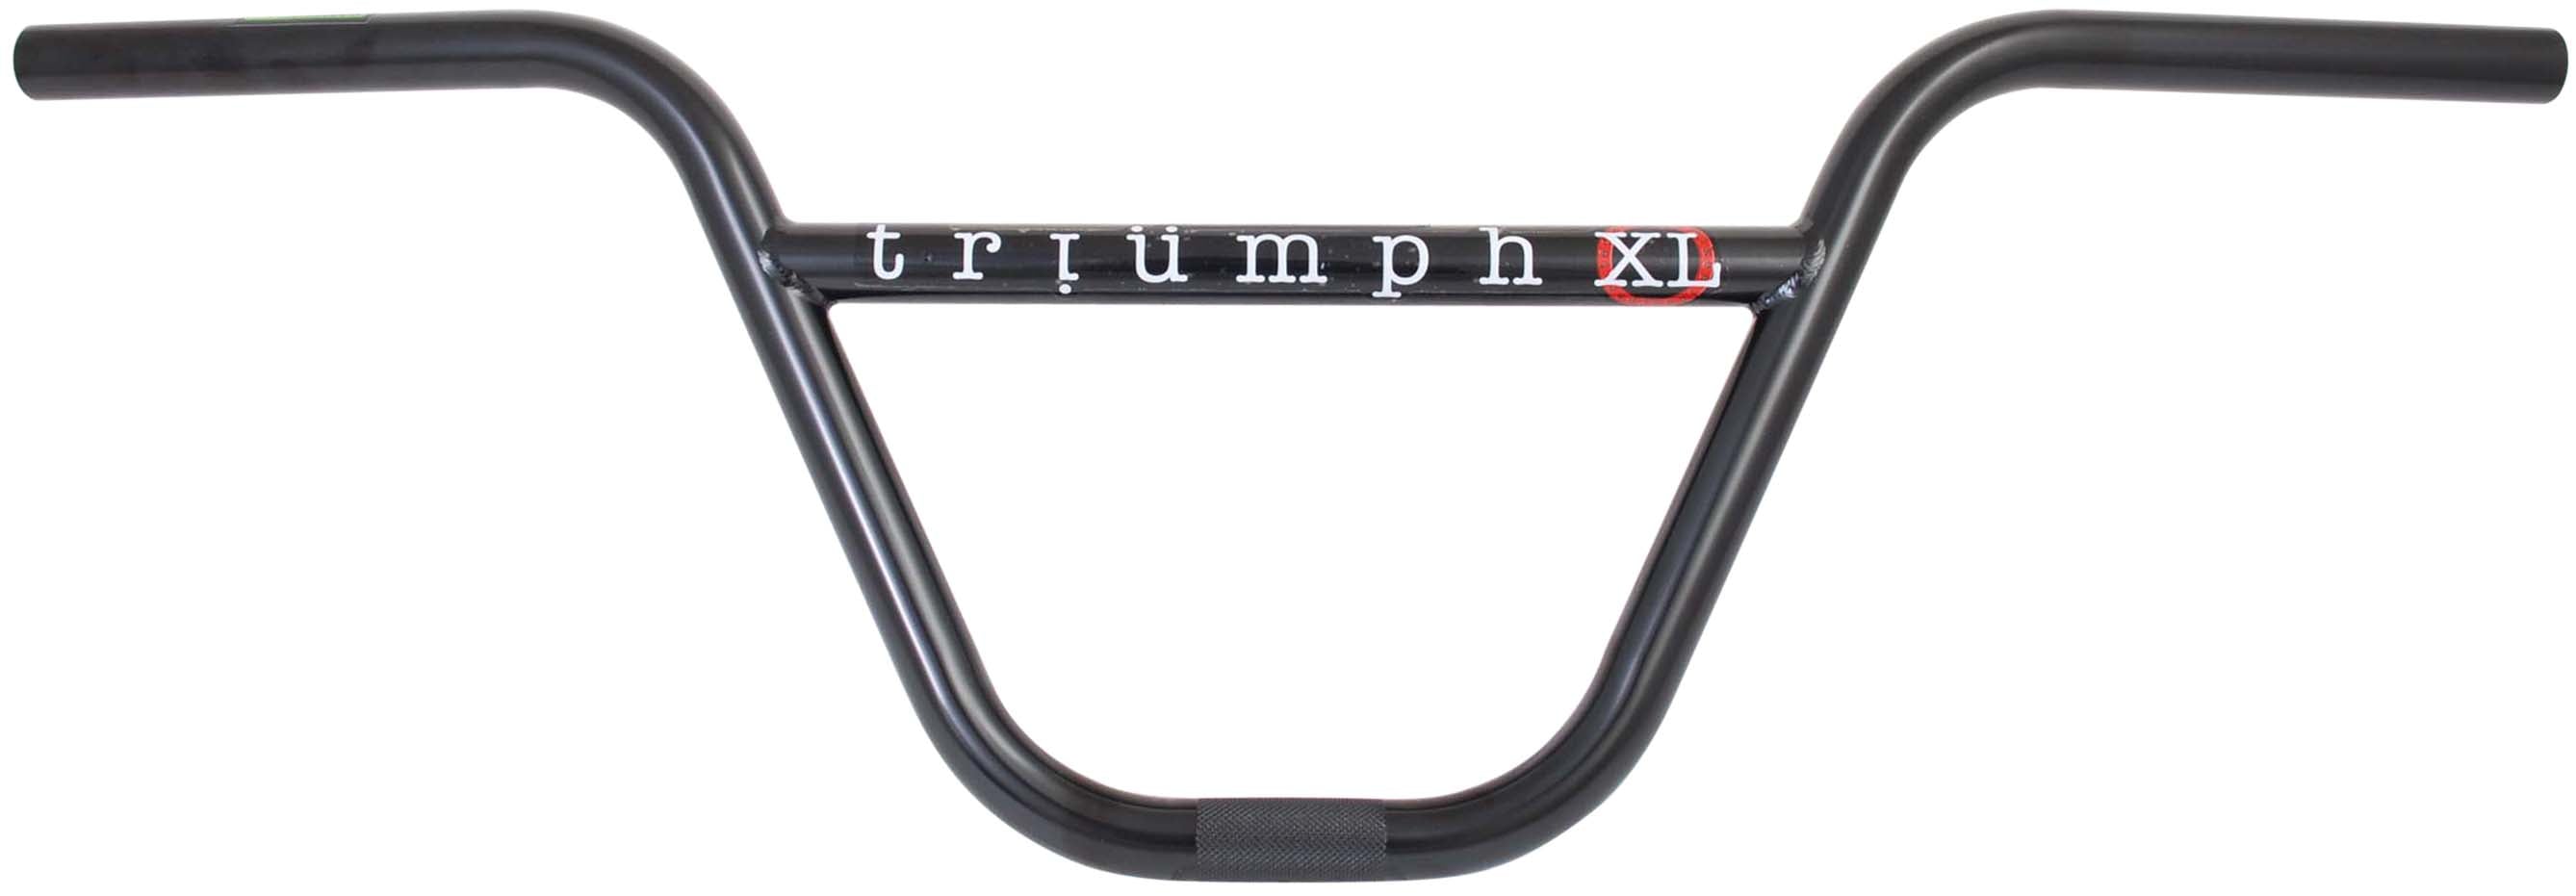 Sunday Triumph Xl 8.5 Bar